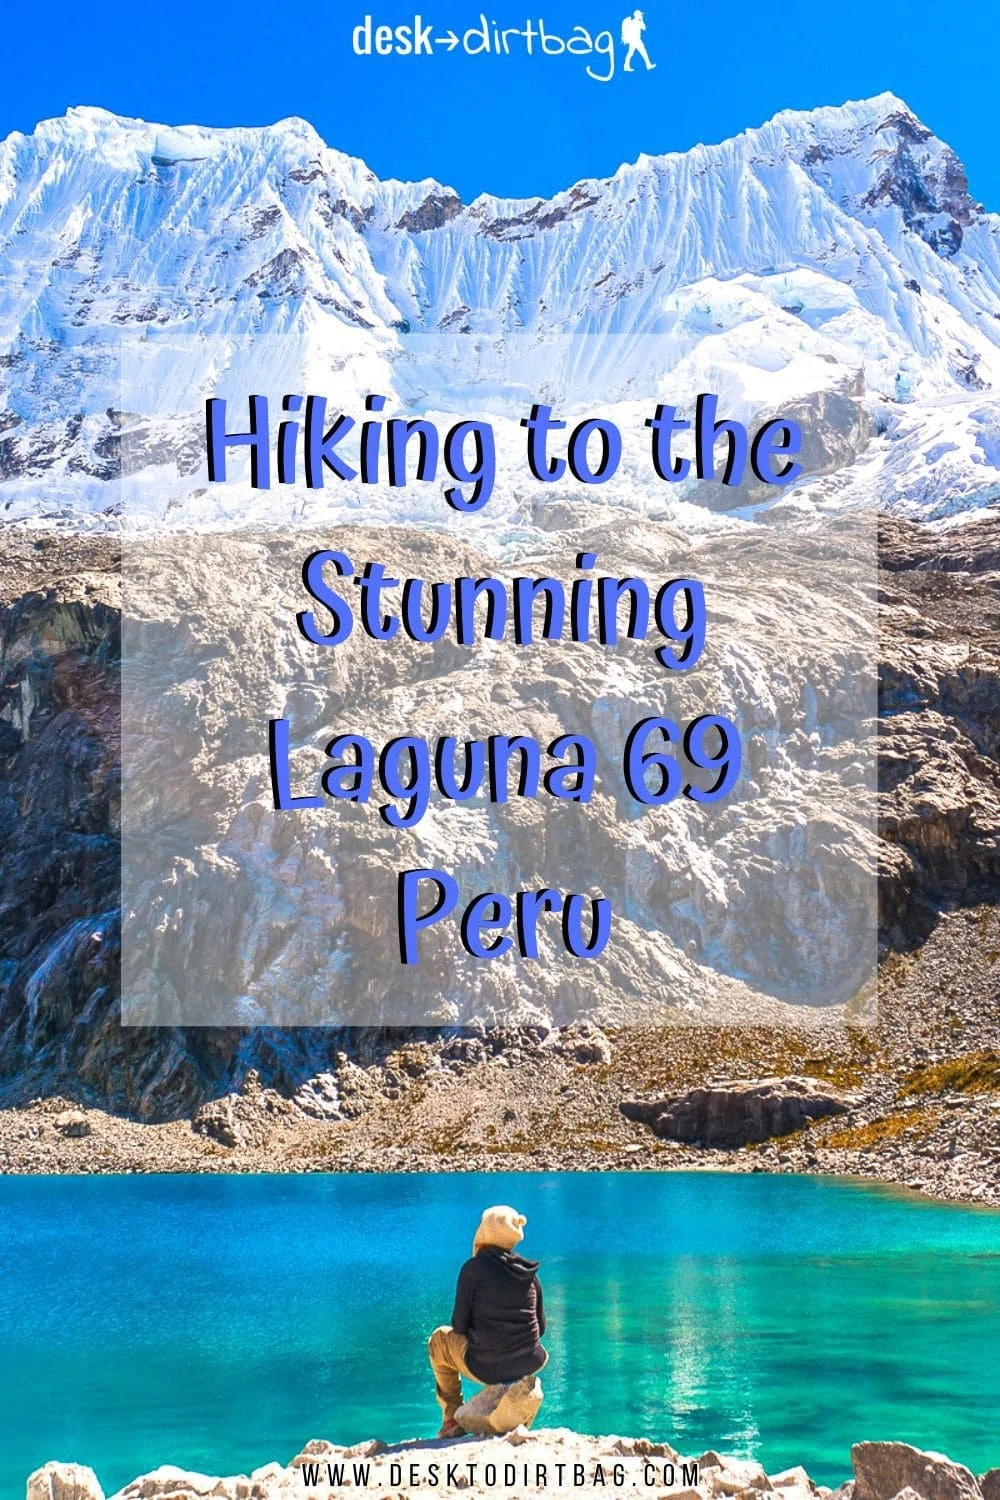 Hiking to Laguna 69 Peru